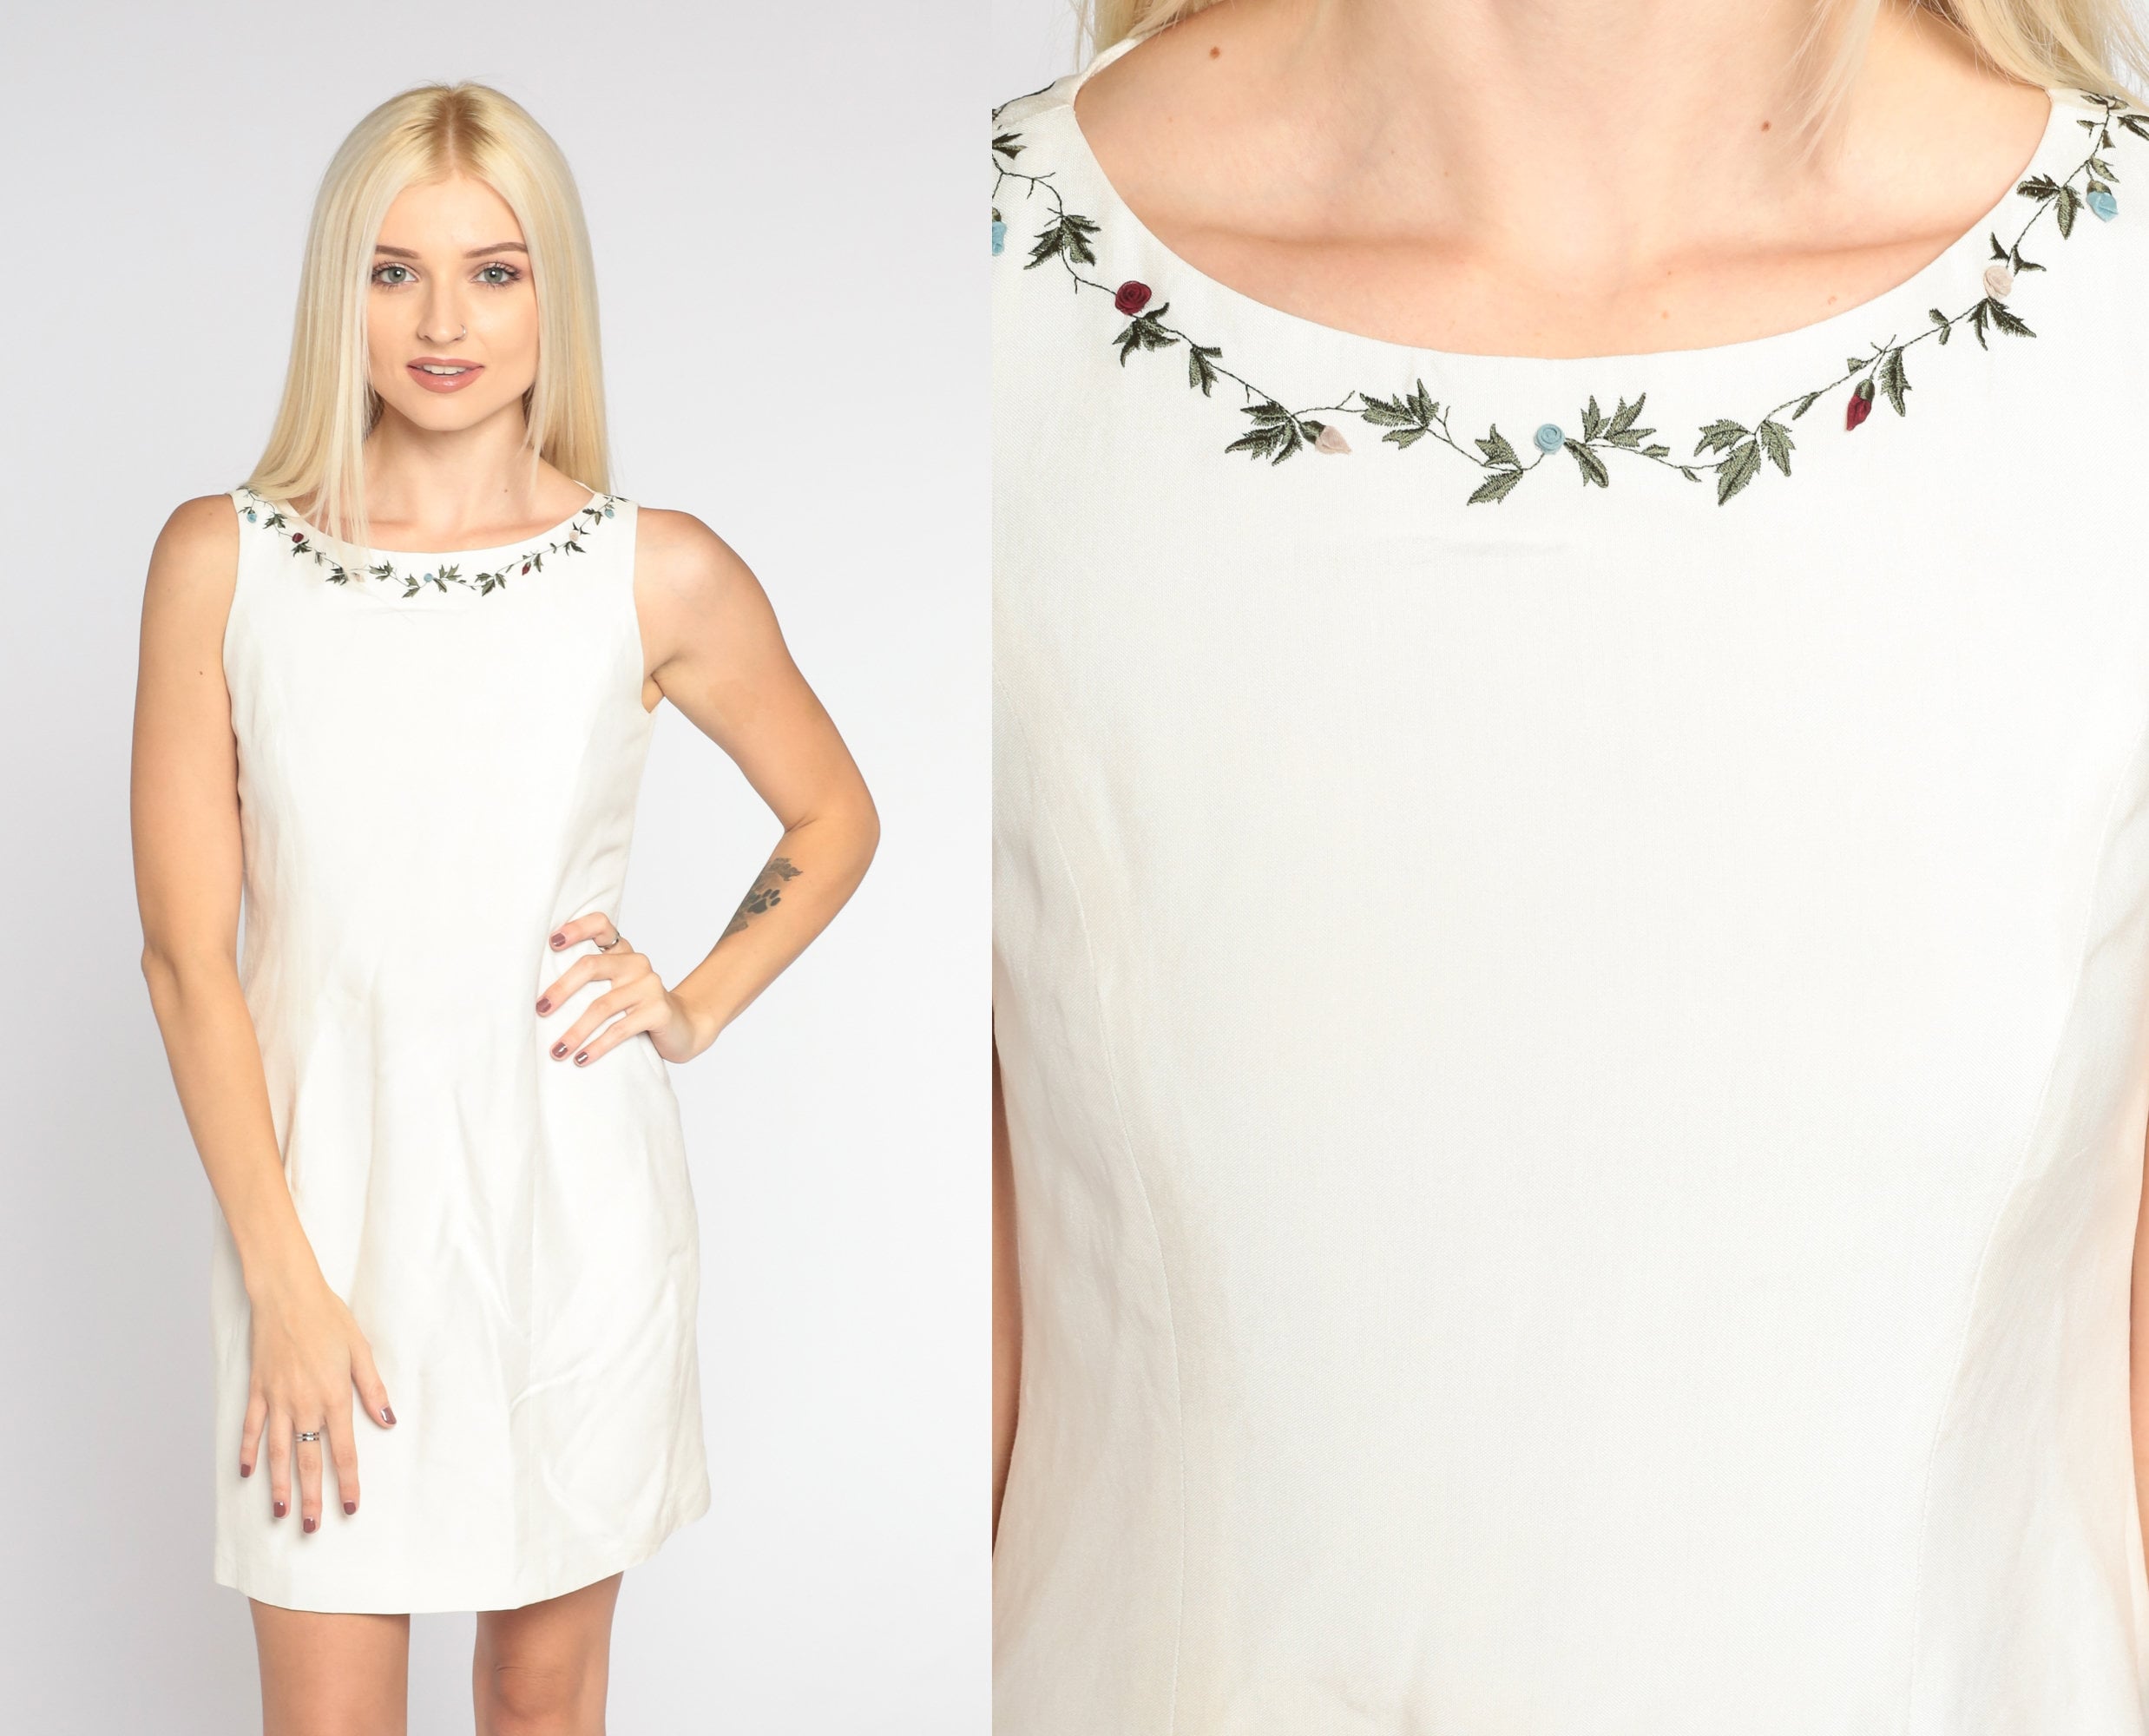 SHEIN Women's White Fringe Detail Cami Top and Bodycorn Skirt Size M N –  Walk Into Fashion